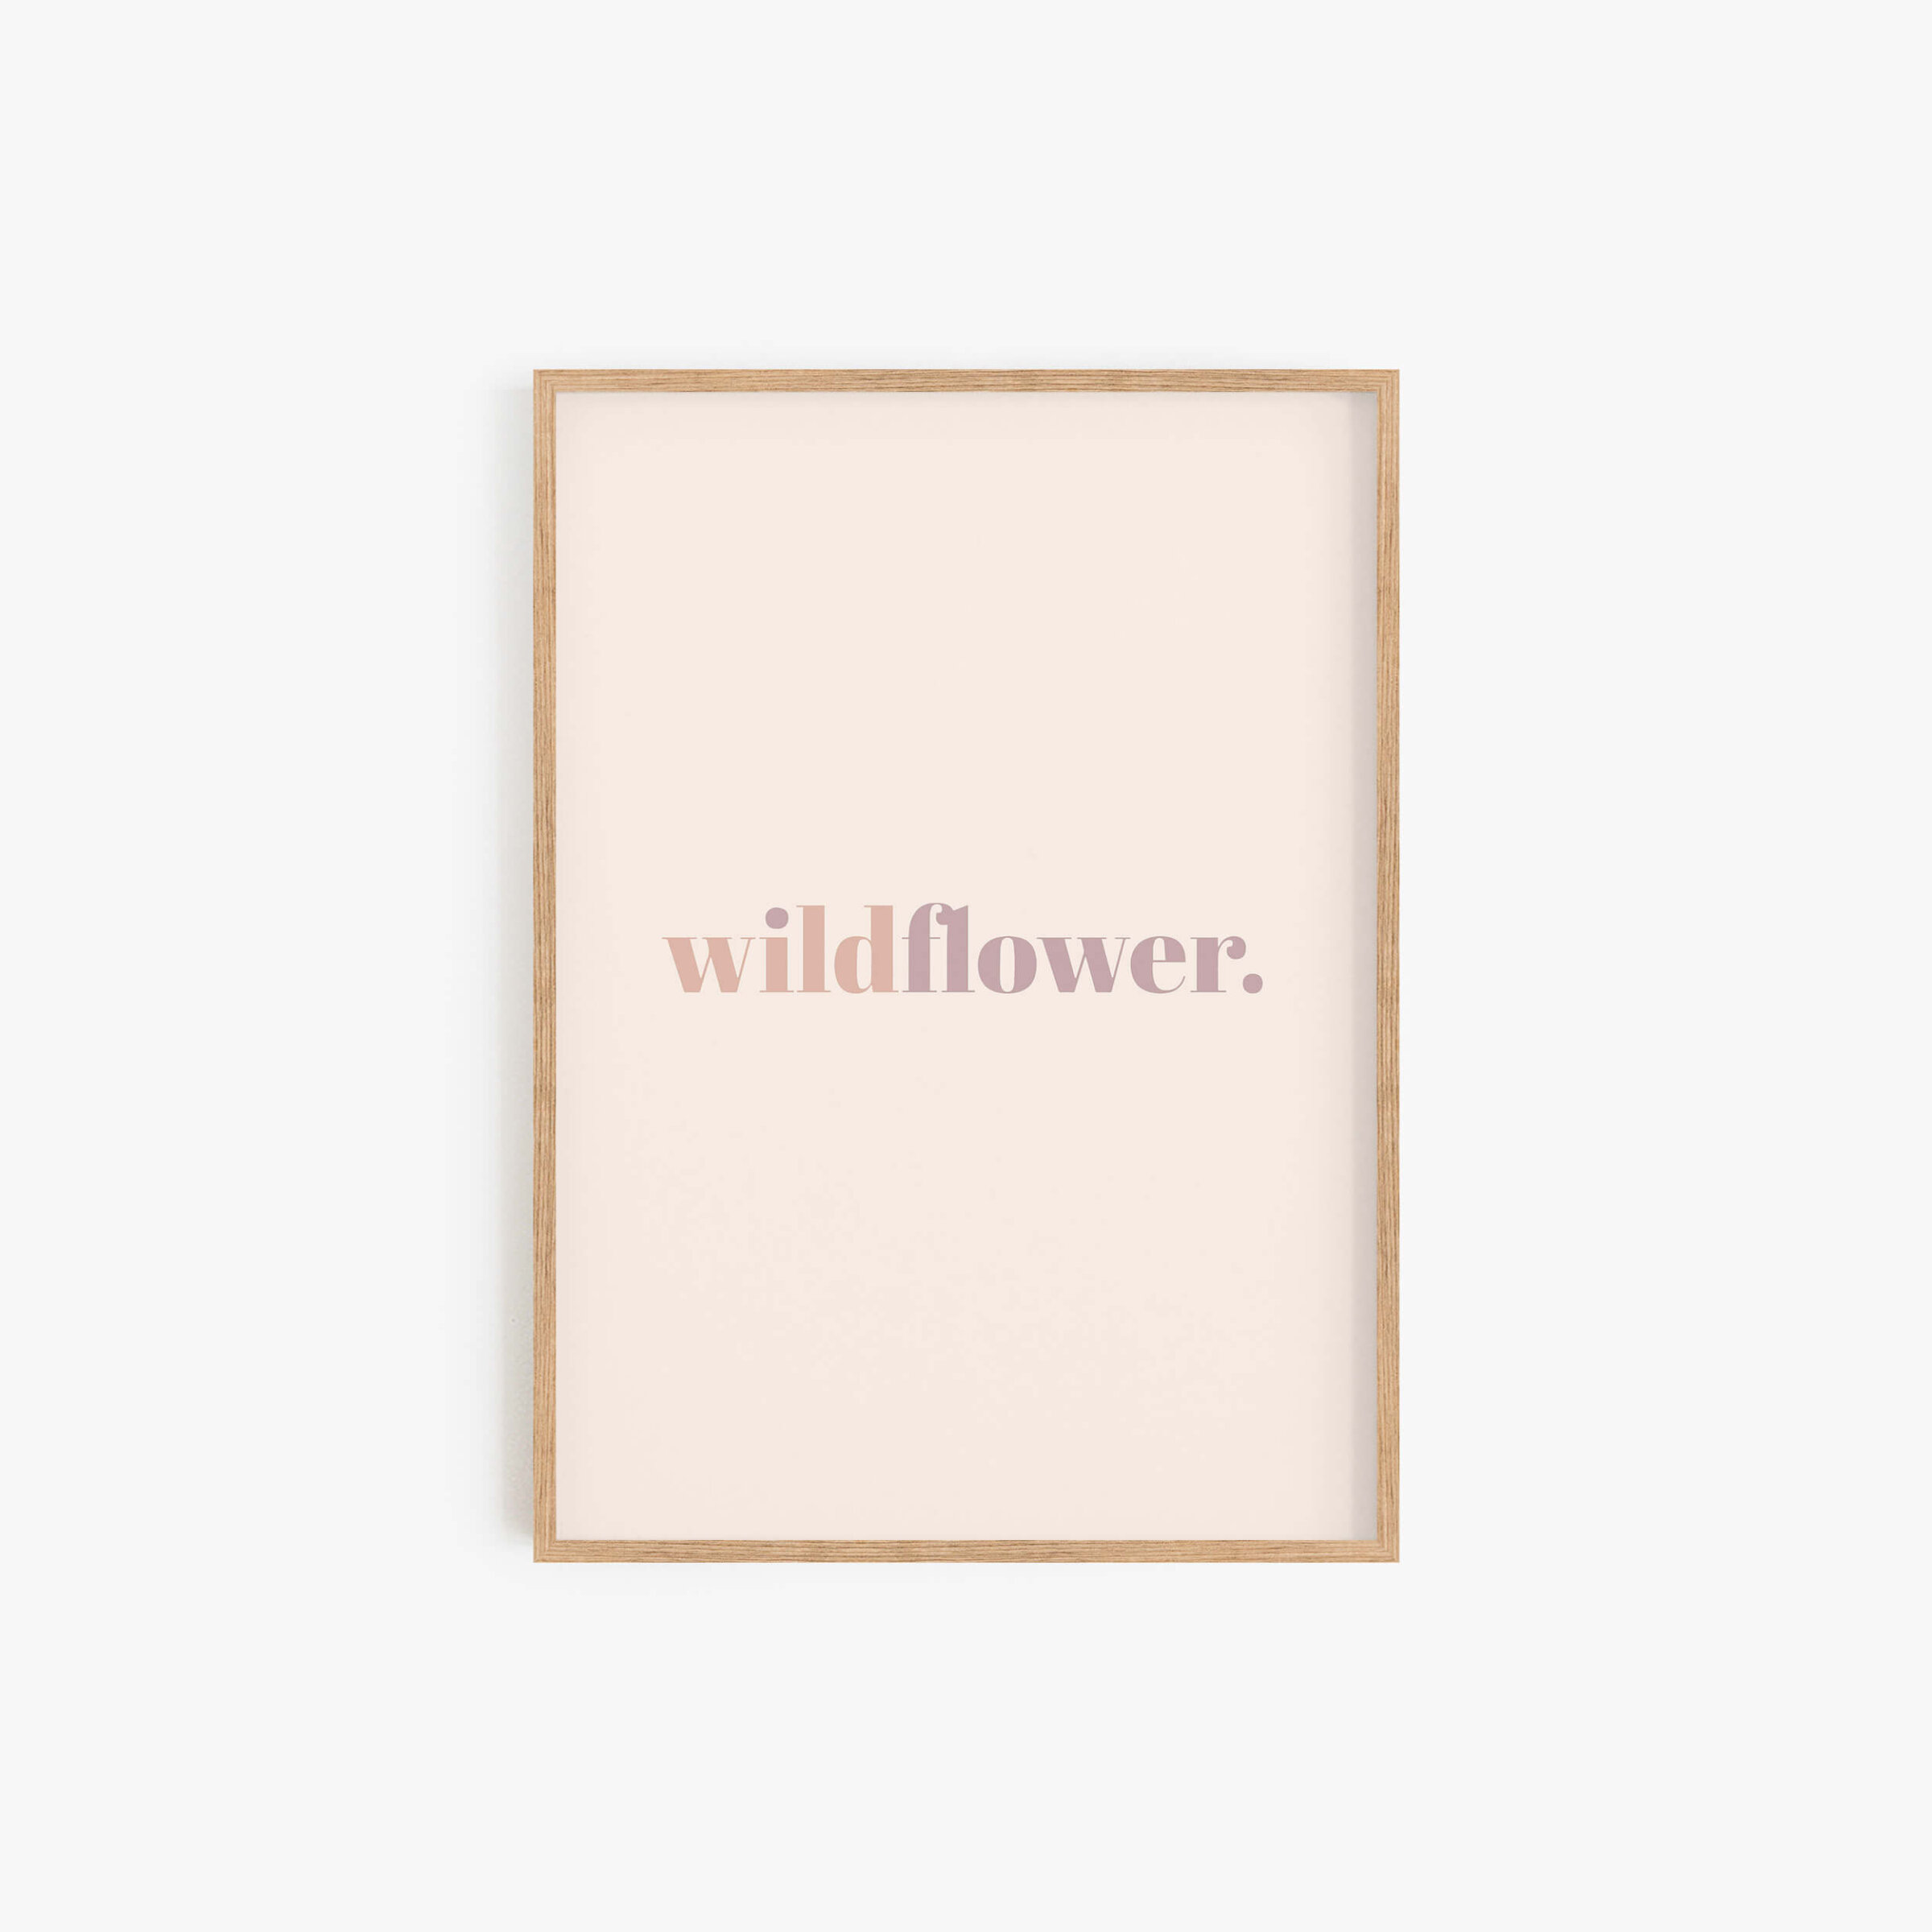 wildflower-print